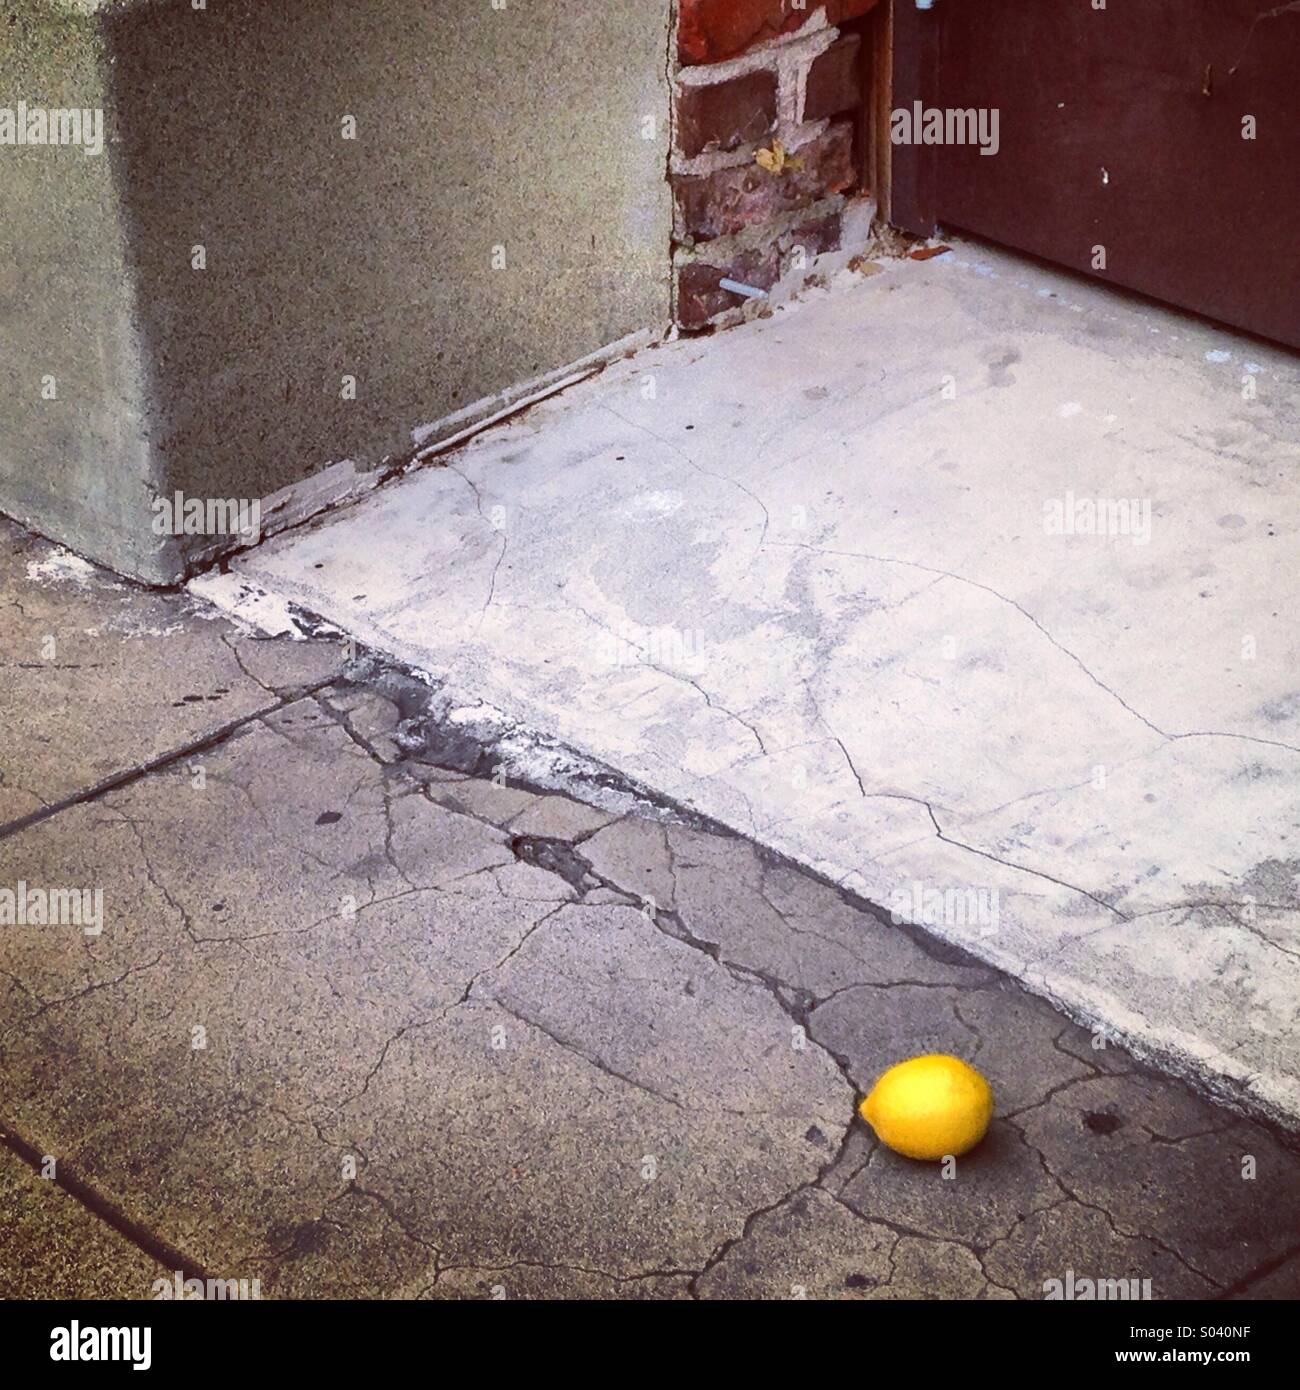 Sidewalk Still Life with Fallen Lemon Stock Photo